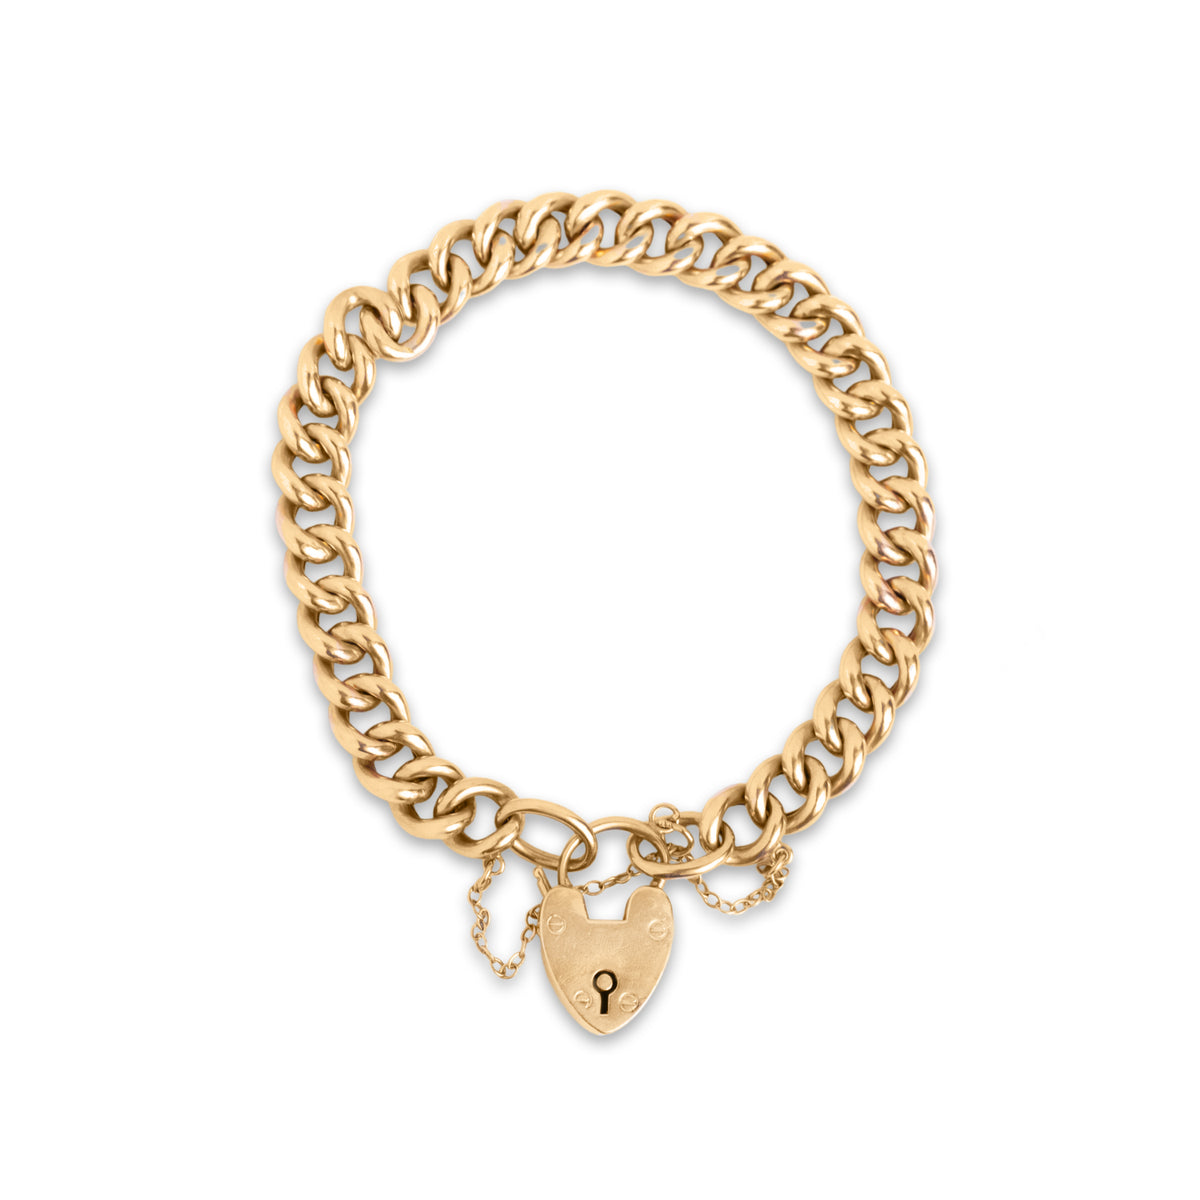 Vintage Charm Bracelet with Twenty Charms – Gem Set Love